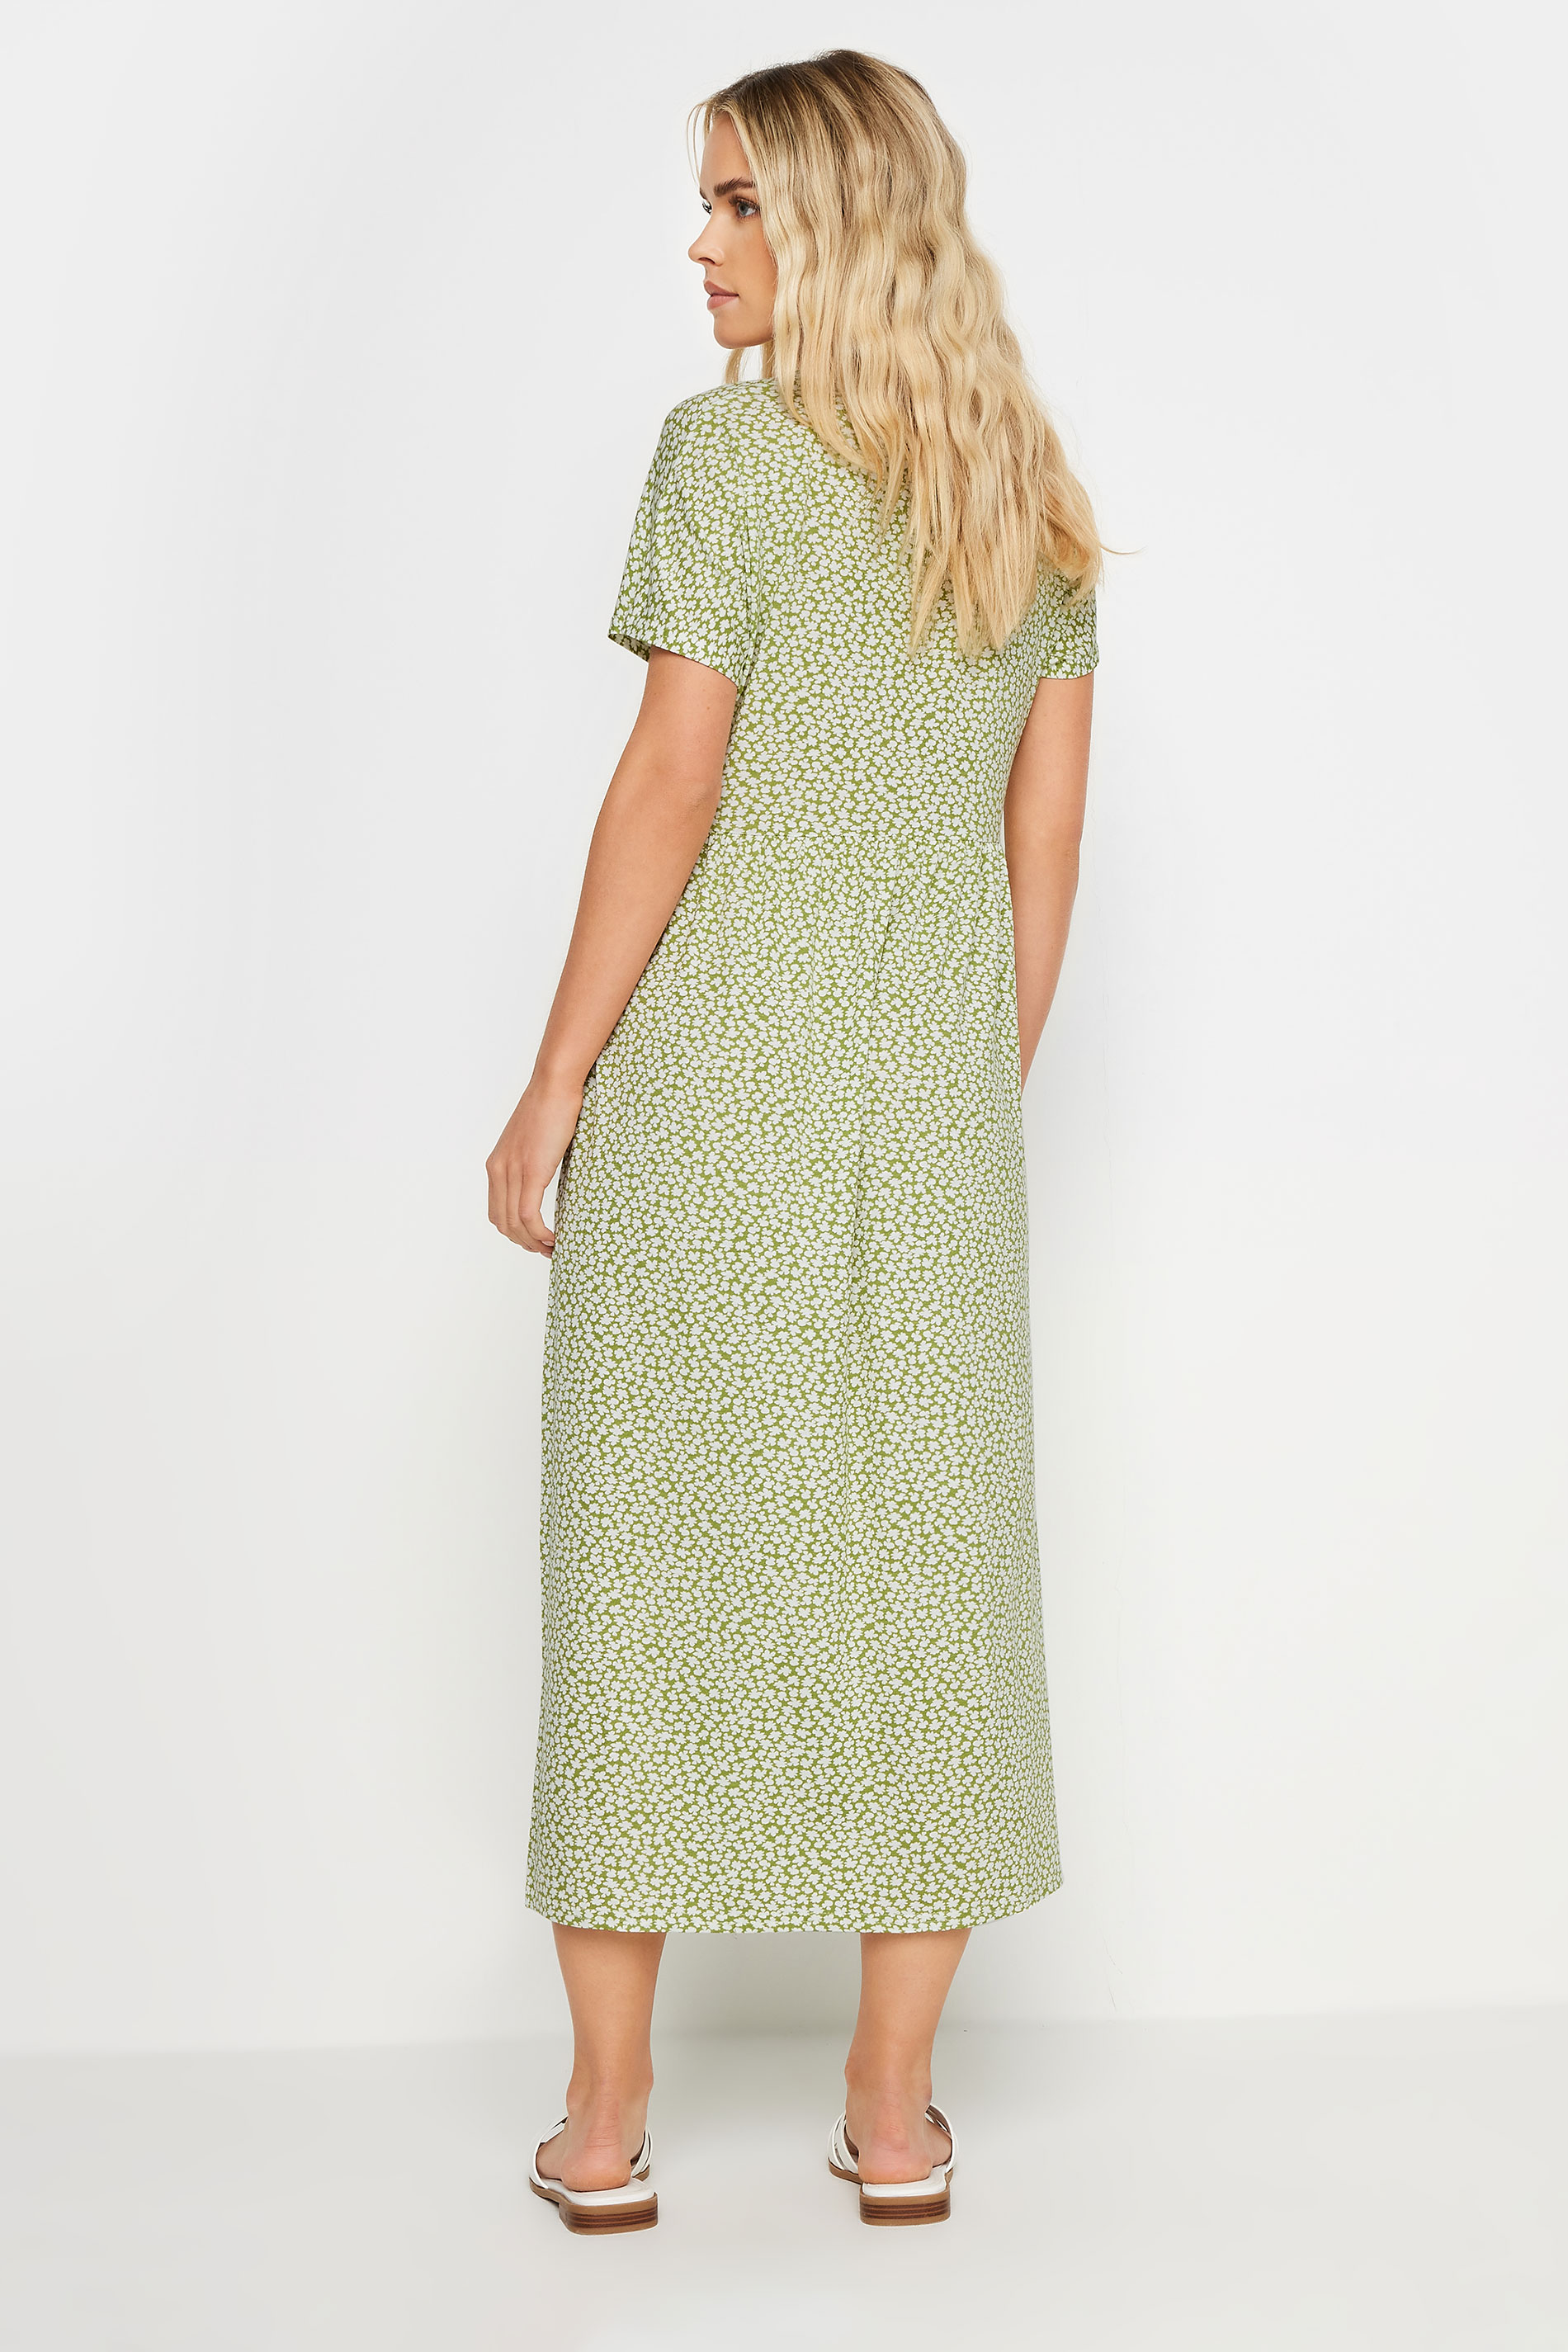 PixieGirl Petite Women's Sage Green Ditsy Floral Print Midi Smock Dress | PixieGirl 3